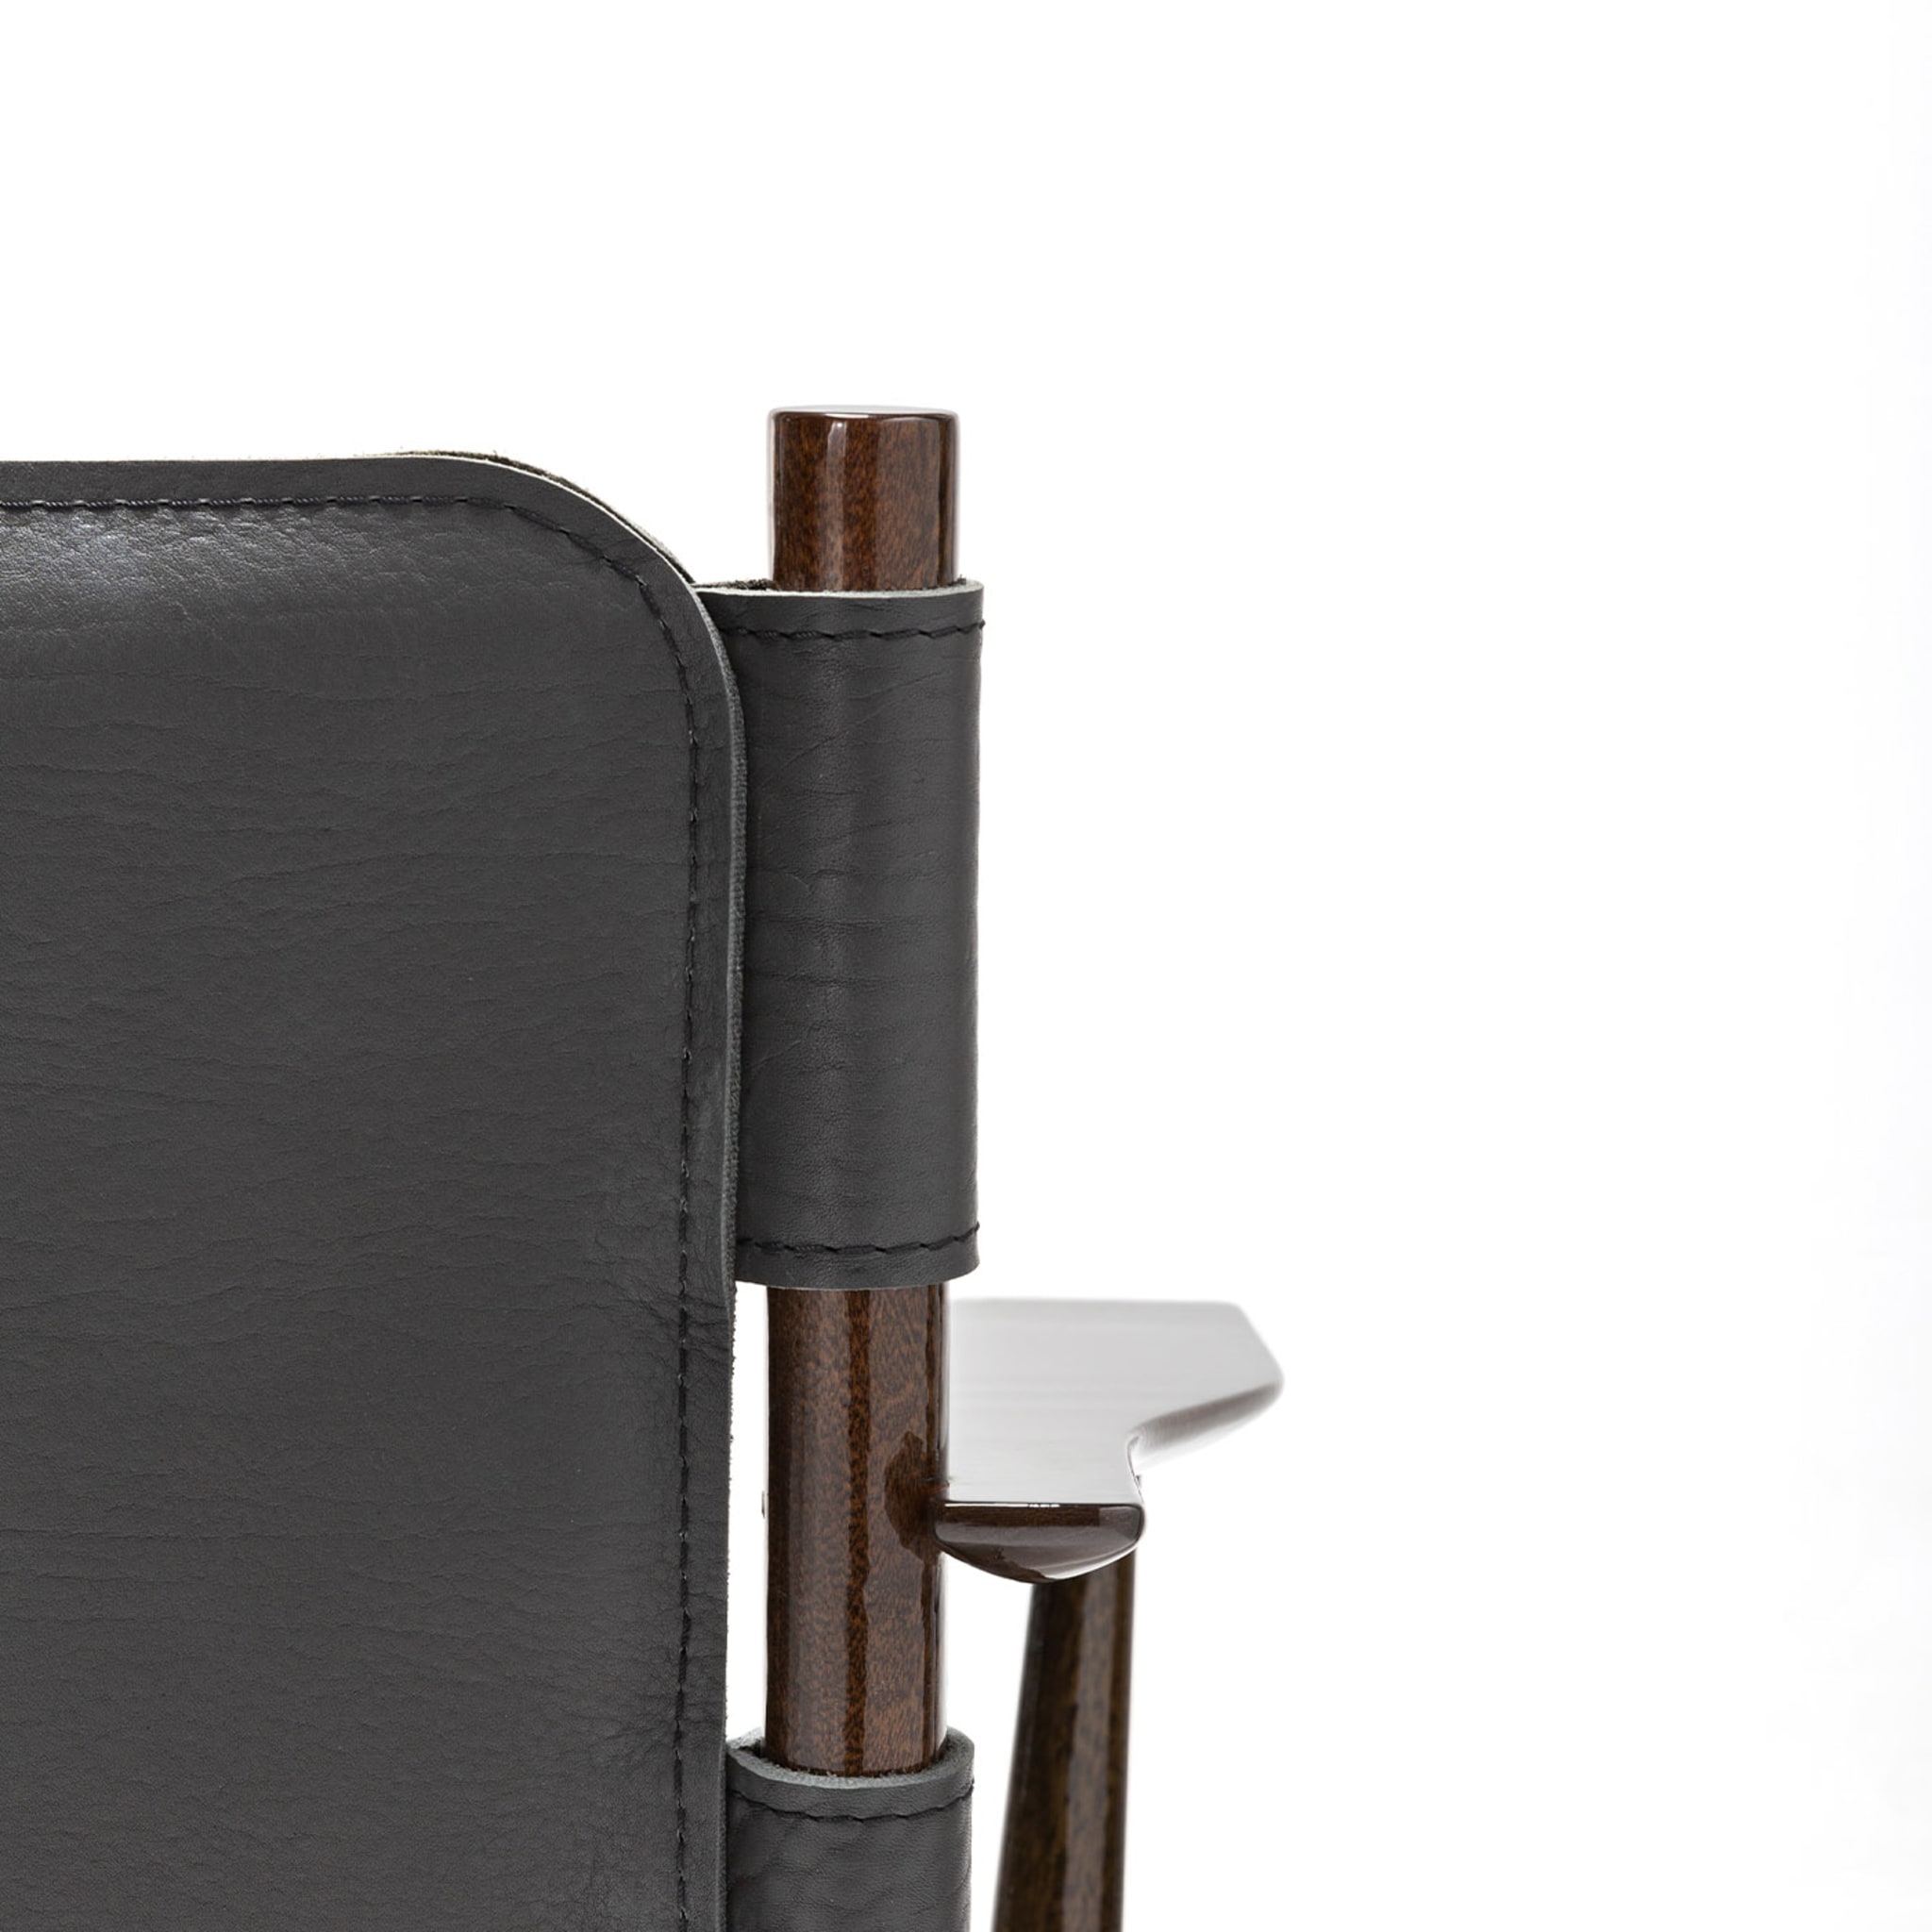 Levante Dark Leather Chair by Massimo Castagna #6 - Alternative view 3